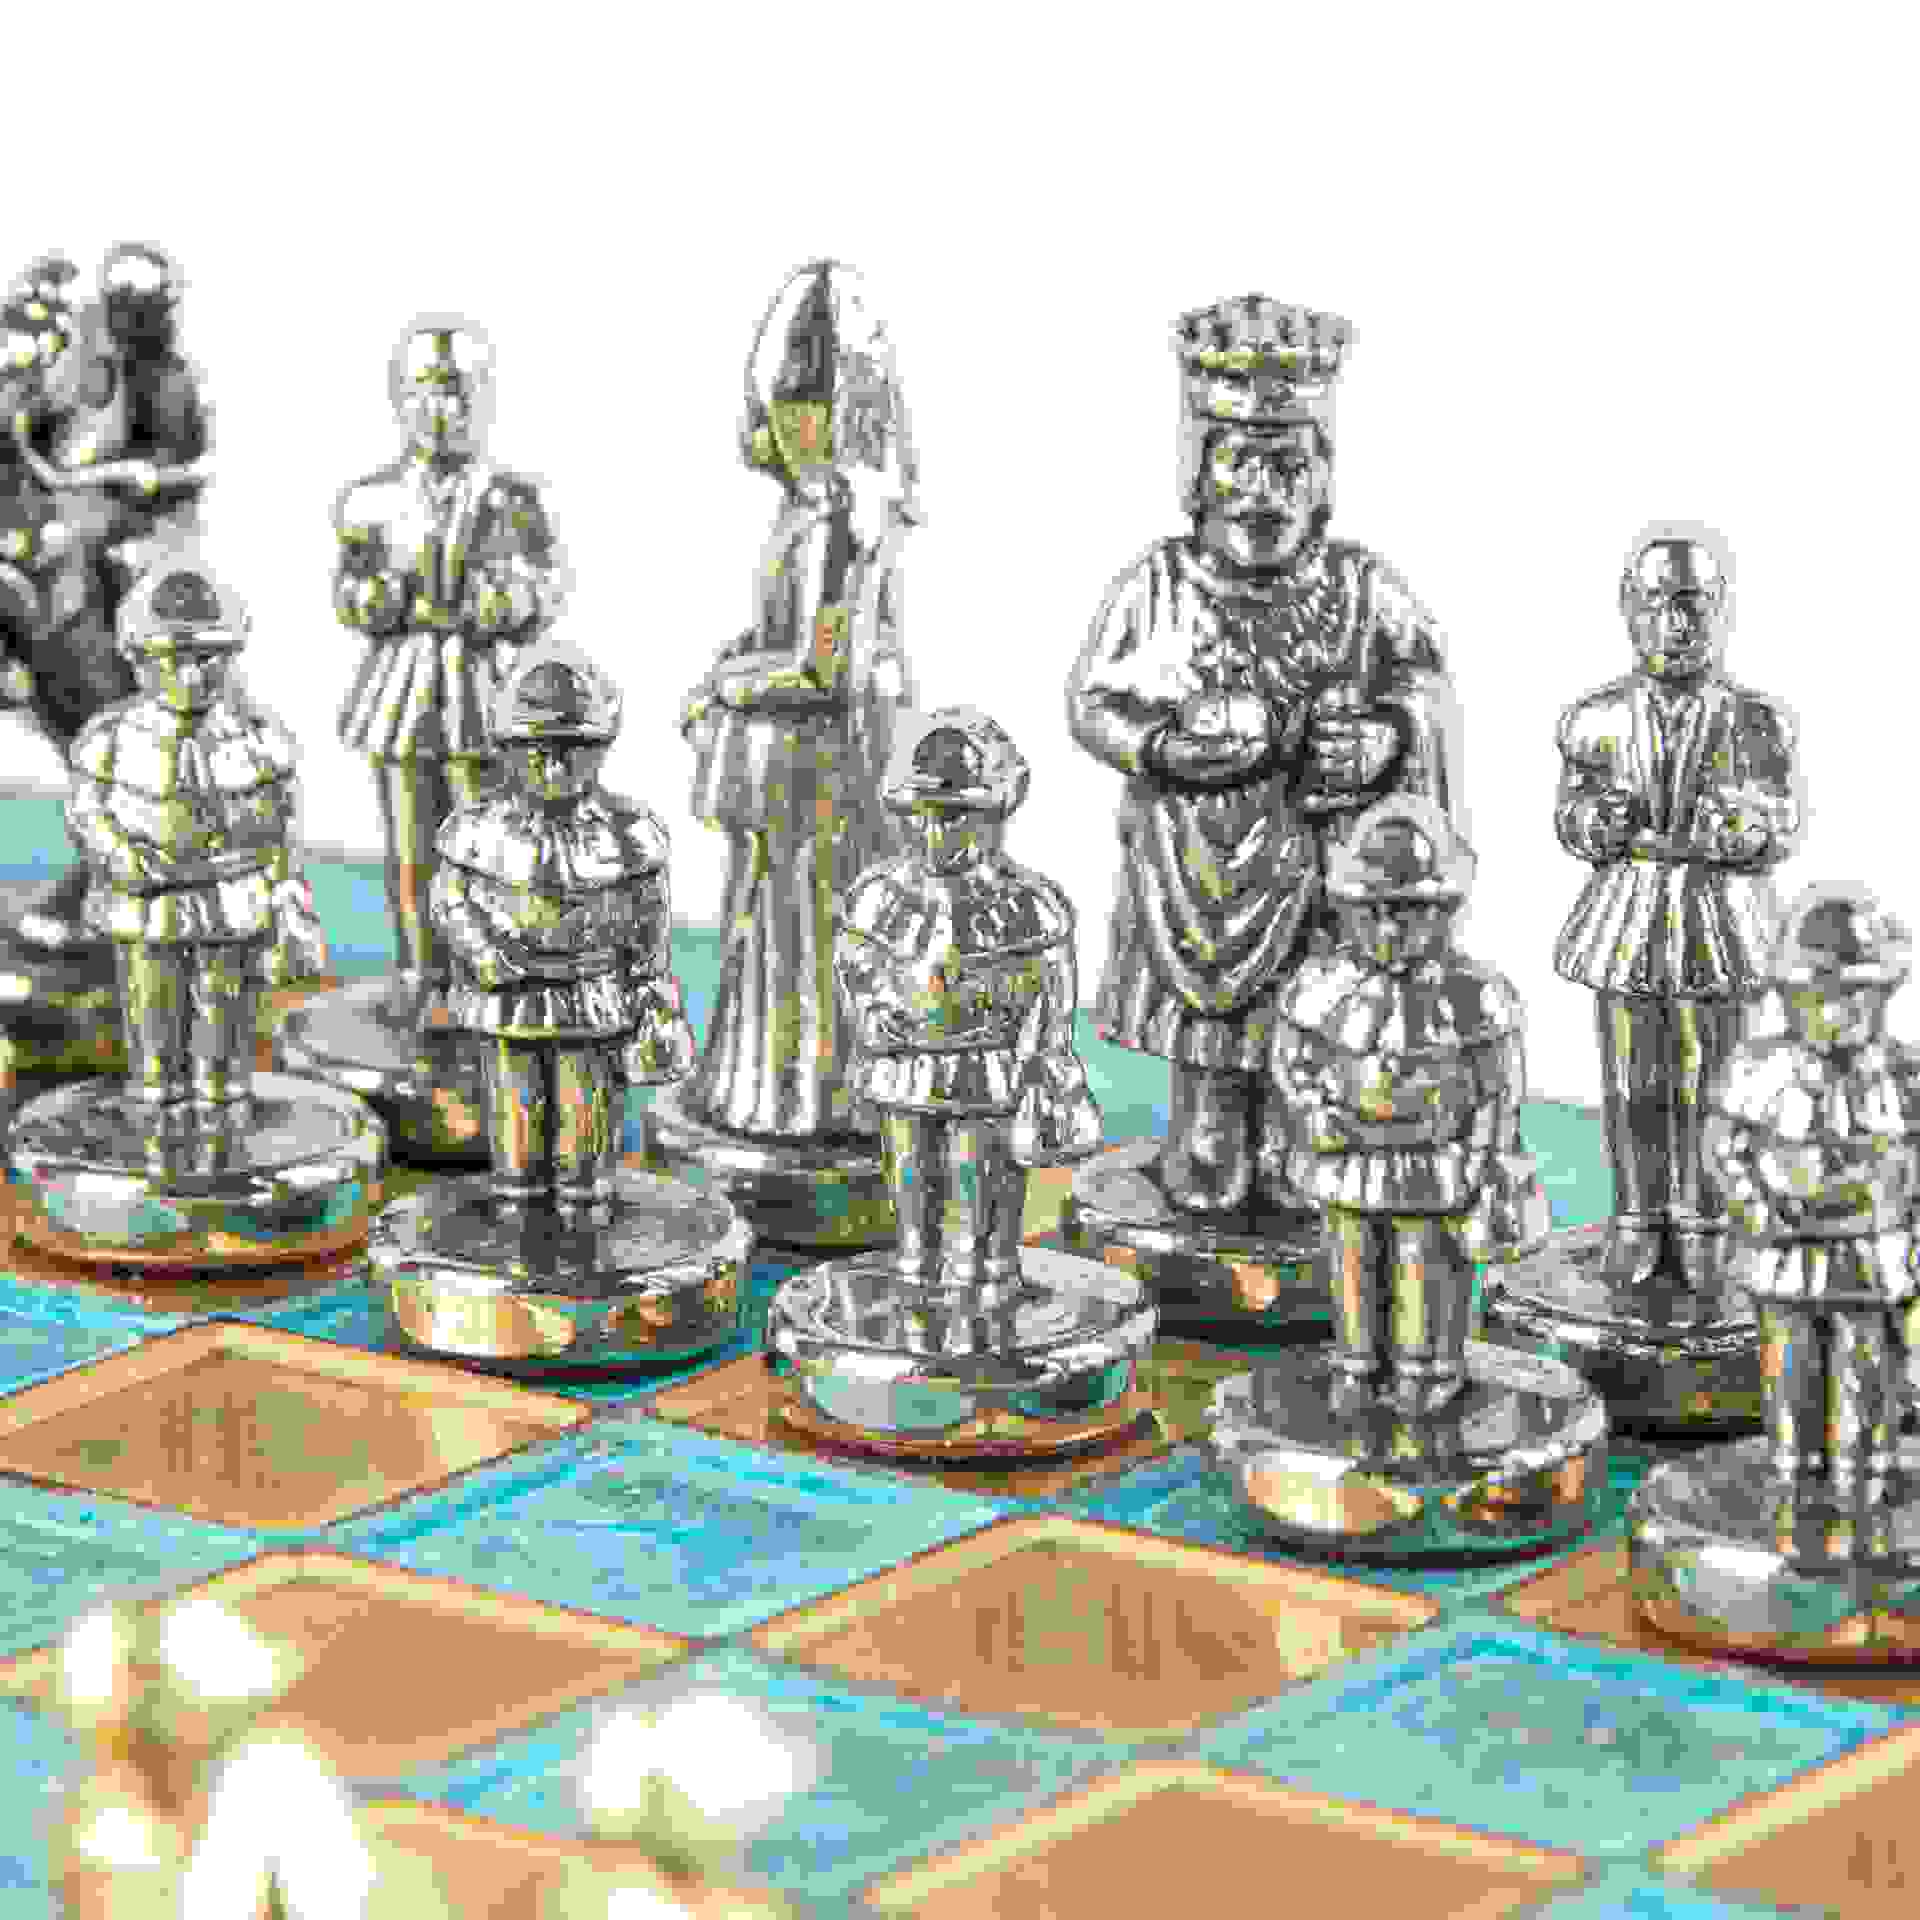 Byzantine Metal Chess Set 20x20cm Antique Turquoise Patina